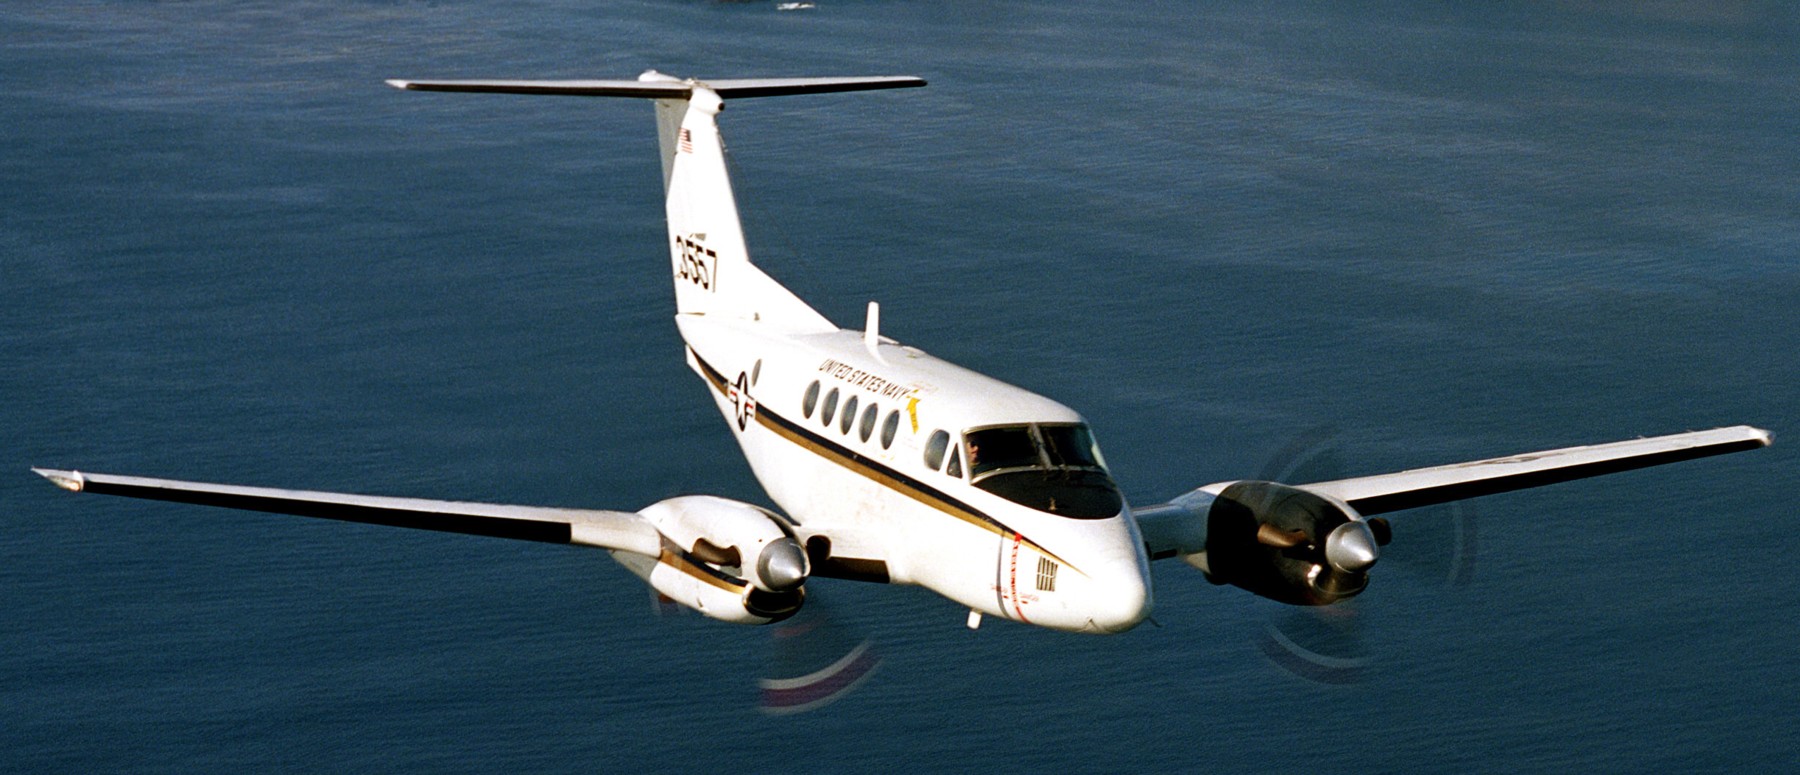 vrc-30 providers fleet logistics support squadron flelogsuppron beechcraft c-12 huron nas north island california 233